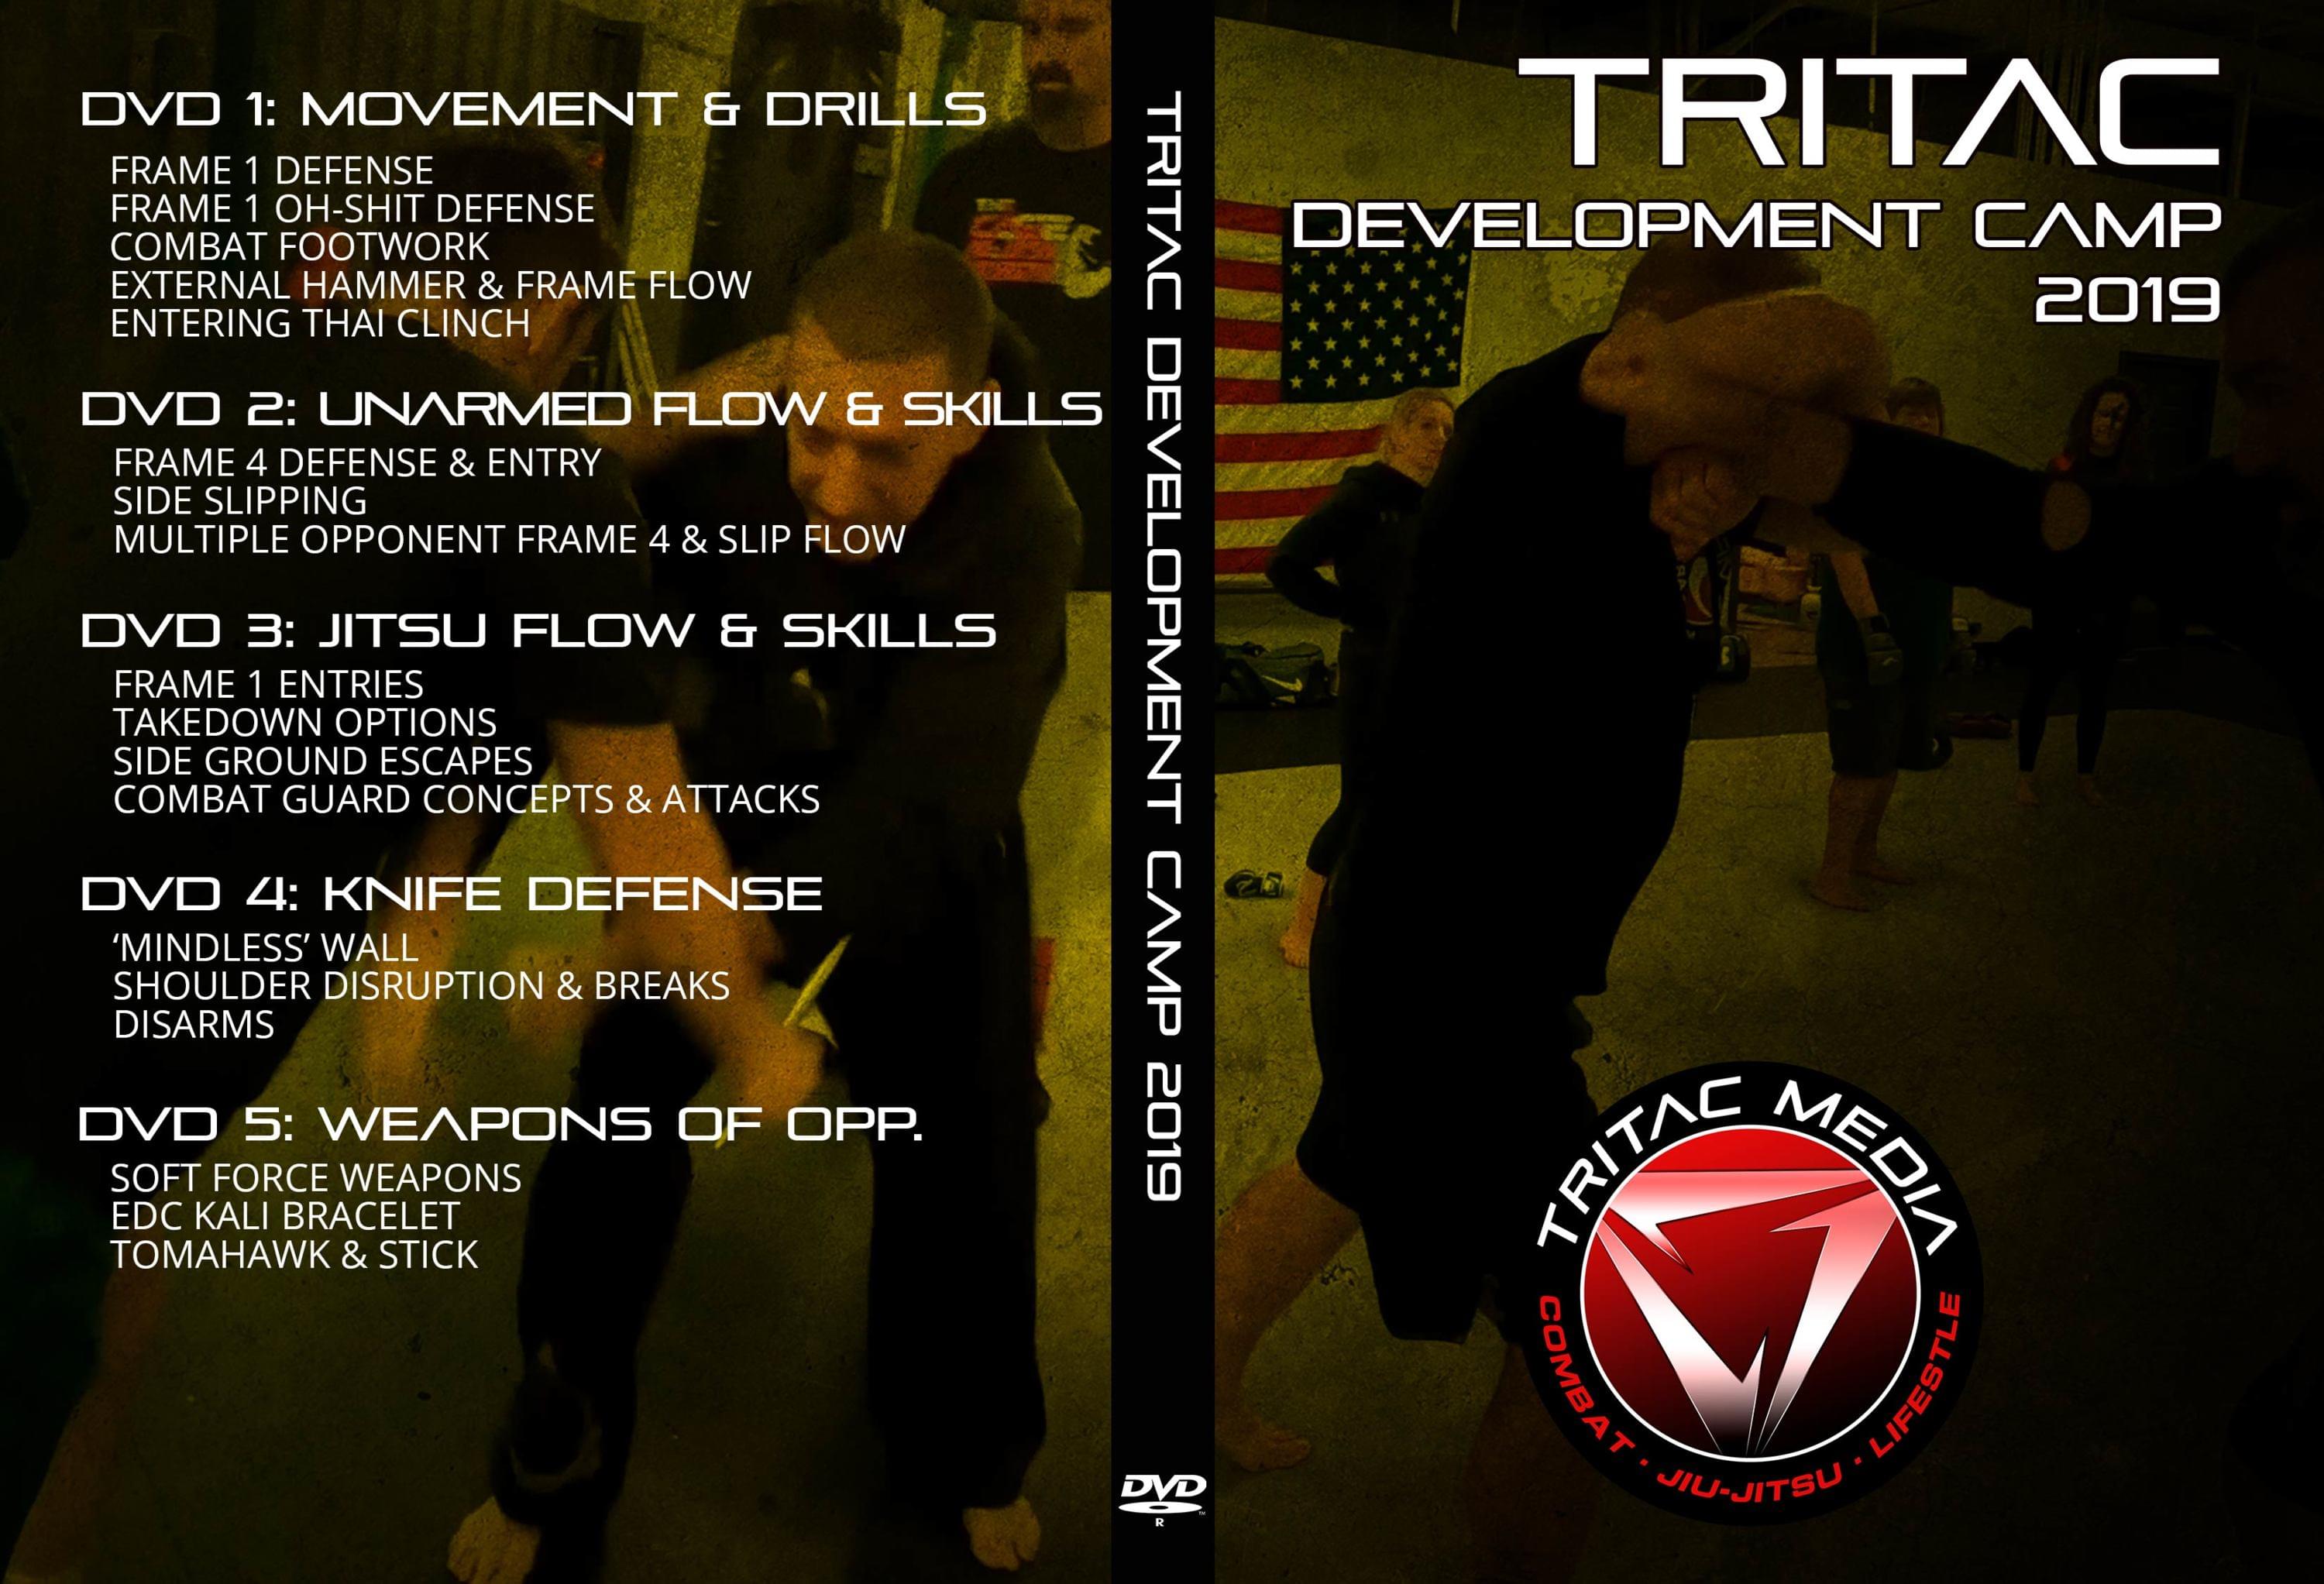 TRITAC Development Camp DVD Series